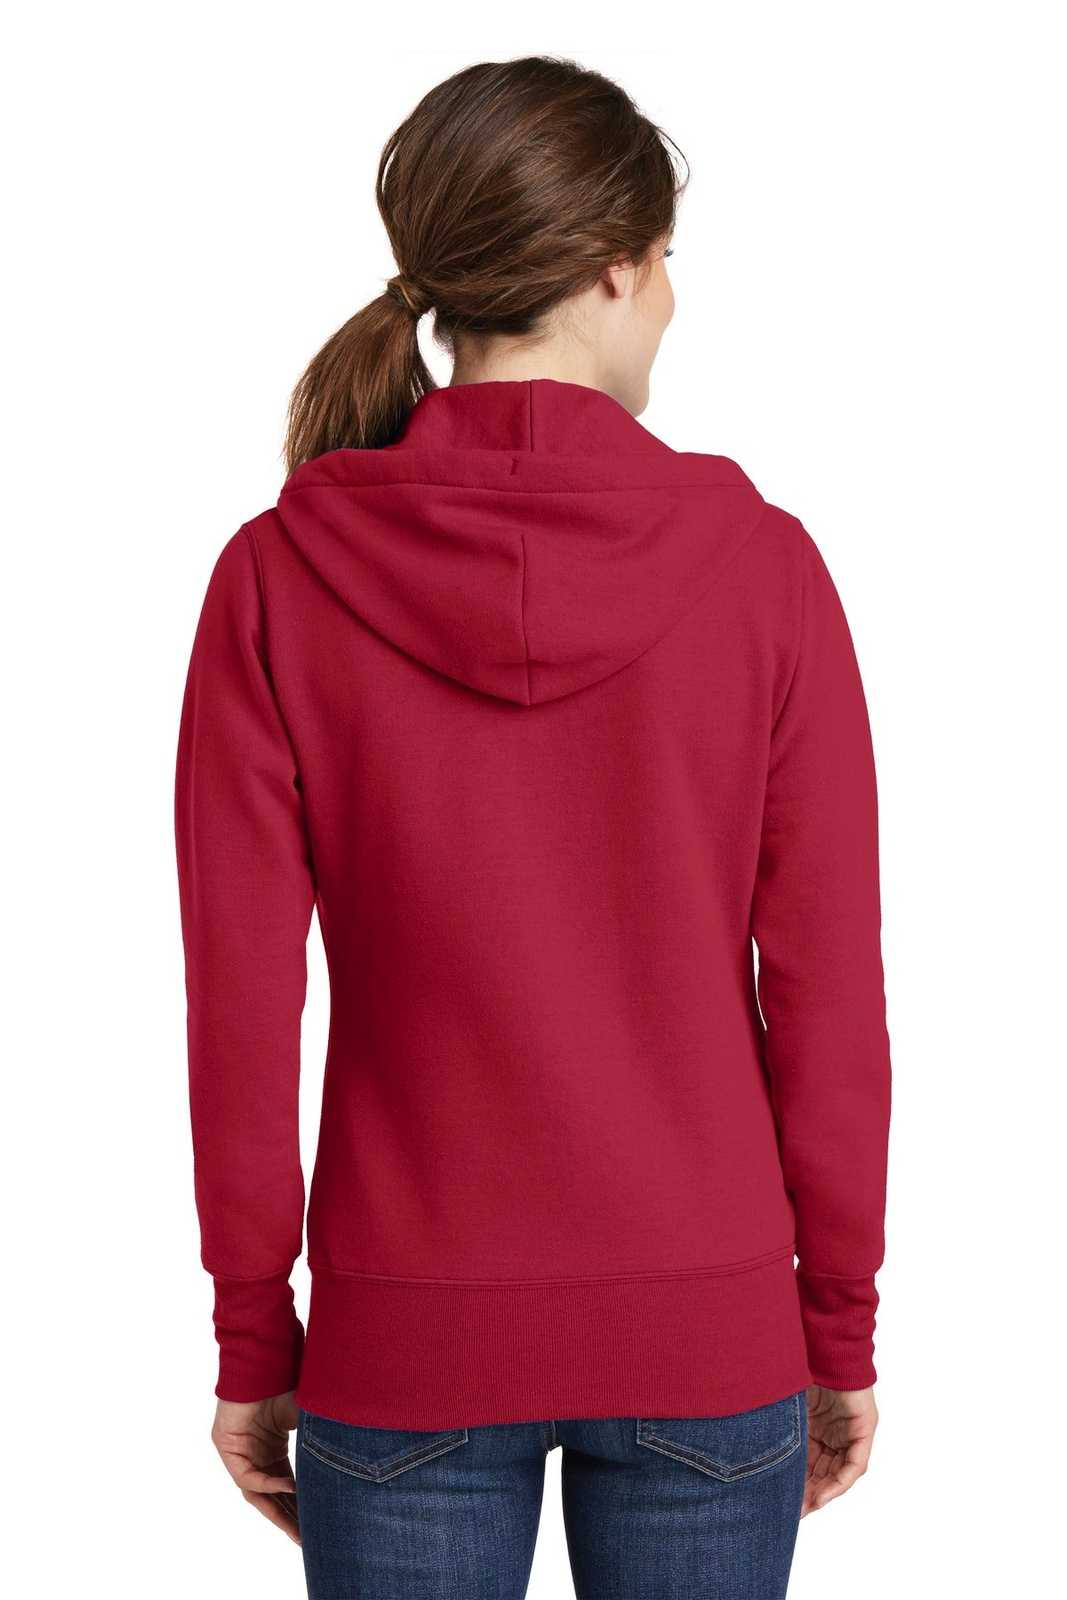 Port & Company LPC78ZH Ladies Core Fleece Full-Zip Hooded Sweatshirt - Red - HIT a Double - 1